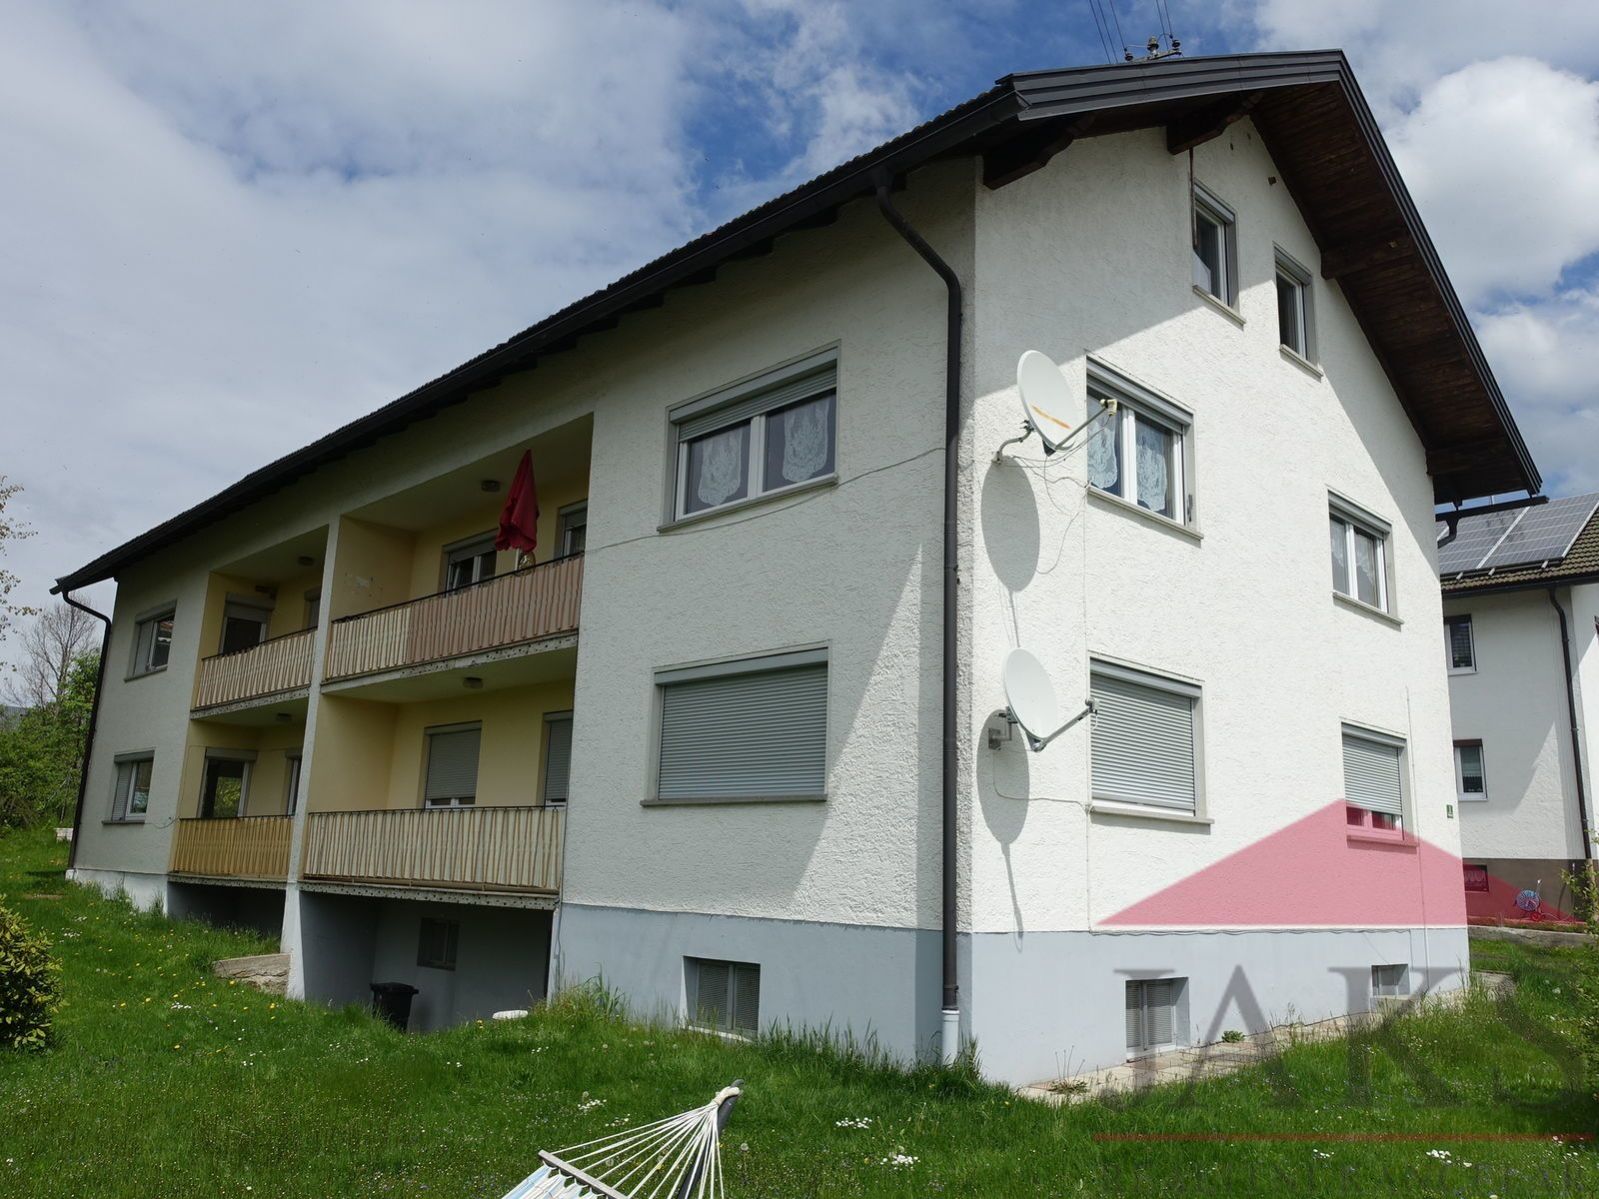 Frauenau - Grubenweg; dům s 6 byty (podl. plocha: 426 m2) garáží a zahradou, obrázek č. 1